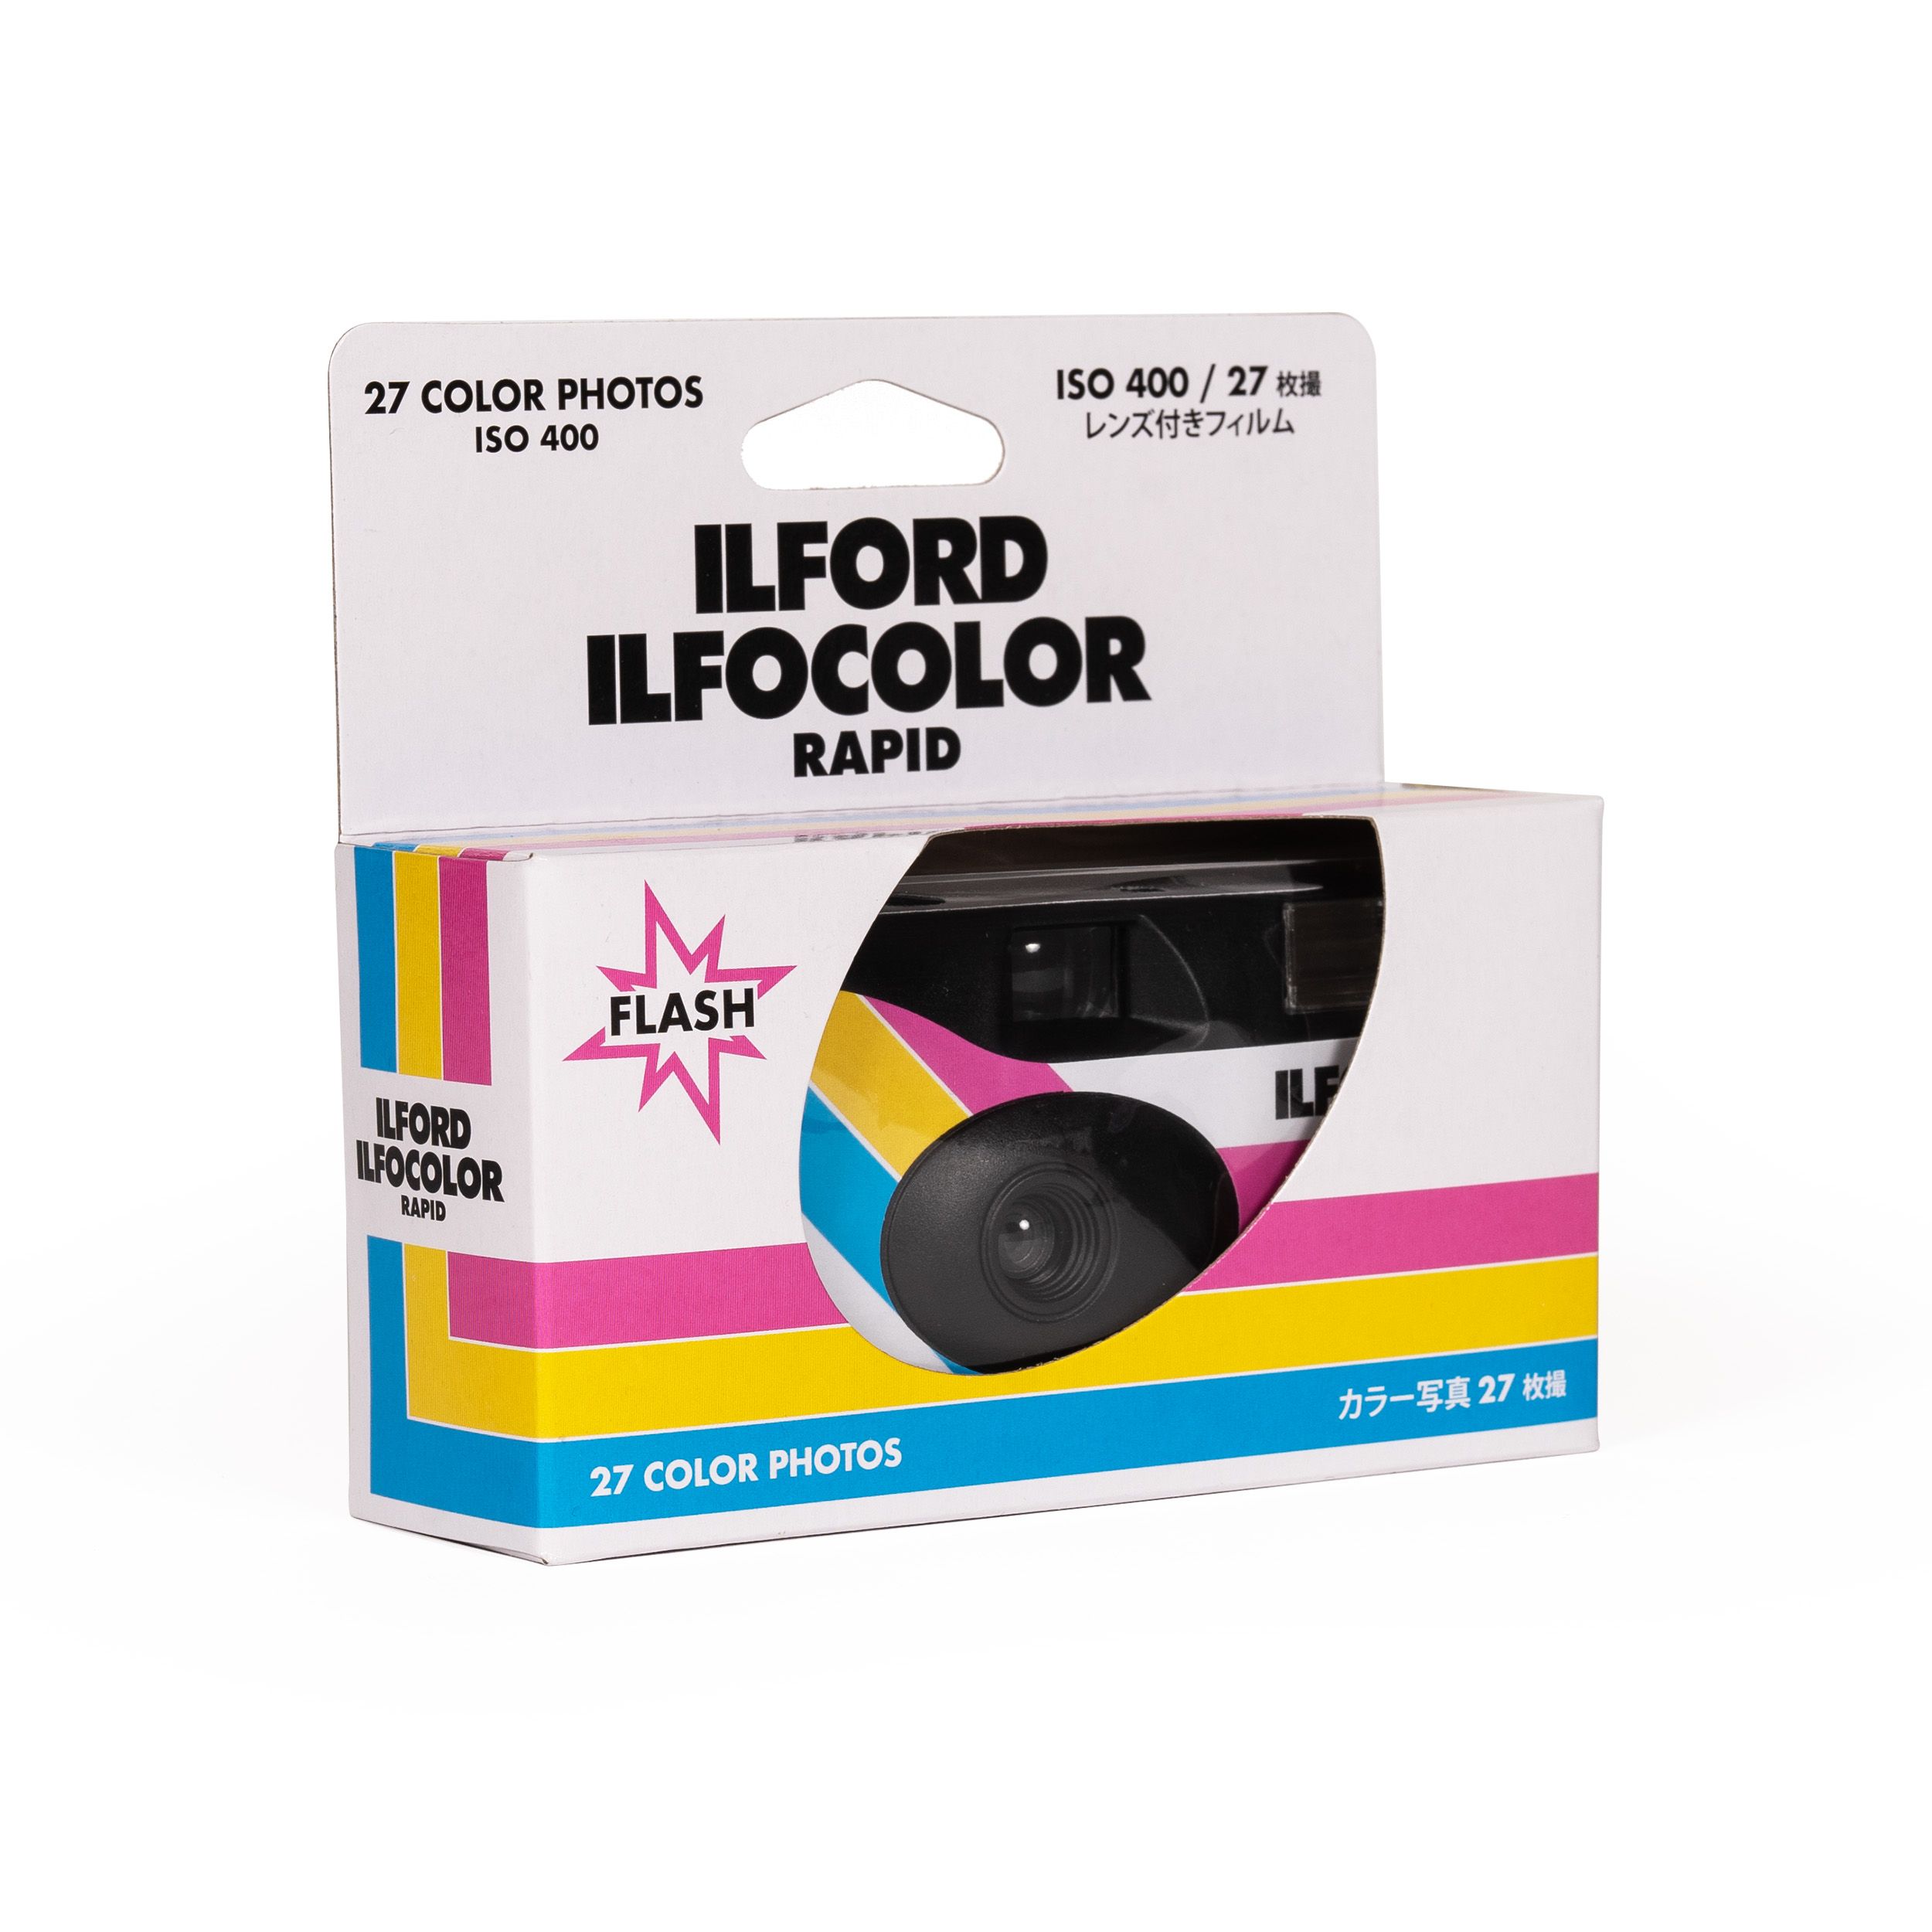 Ilford IlfoColor Single Use Camera - 27 exposures / ISO400 - White